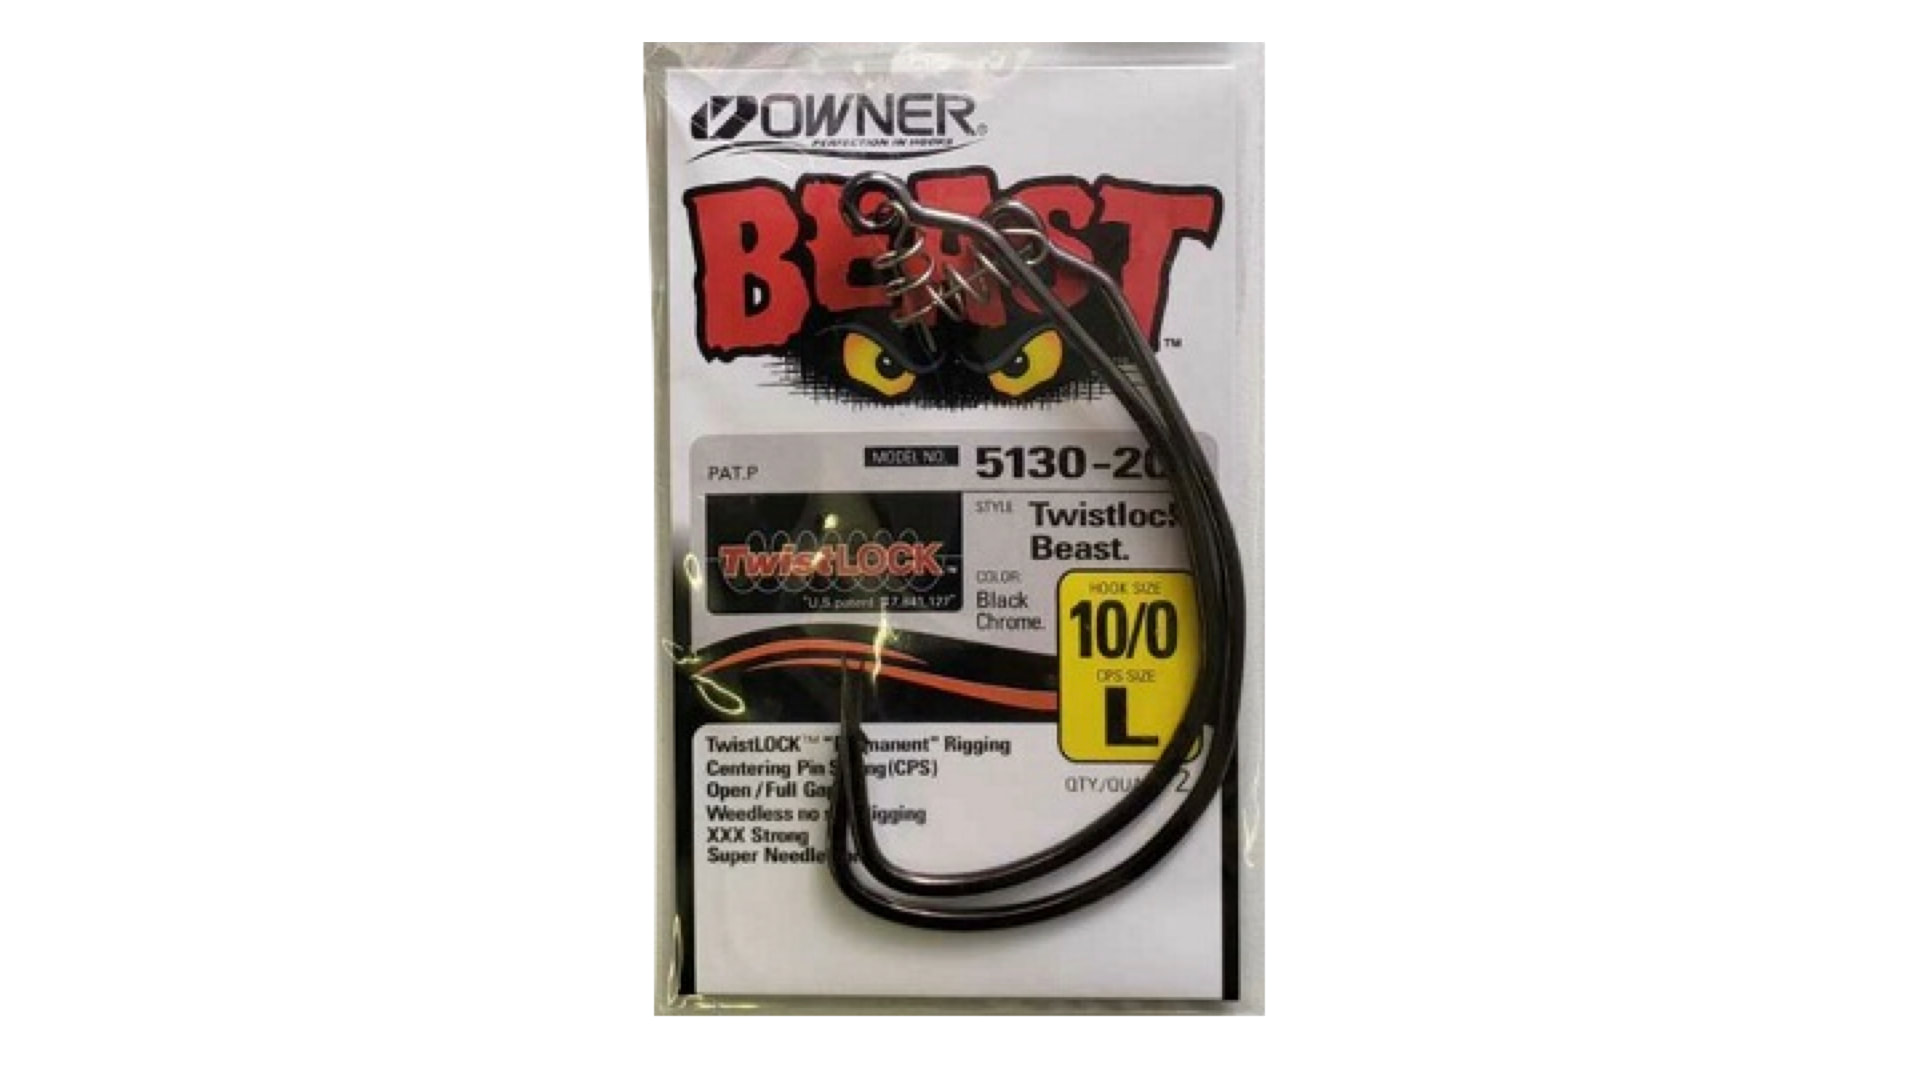 Owner Beast Twistlock 12/0 5130w 3/4oz. - L • Fanatic Pesca